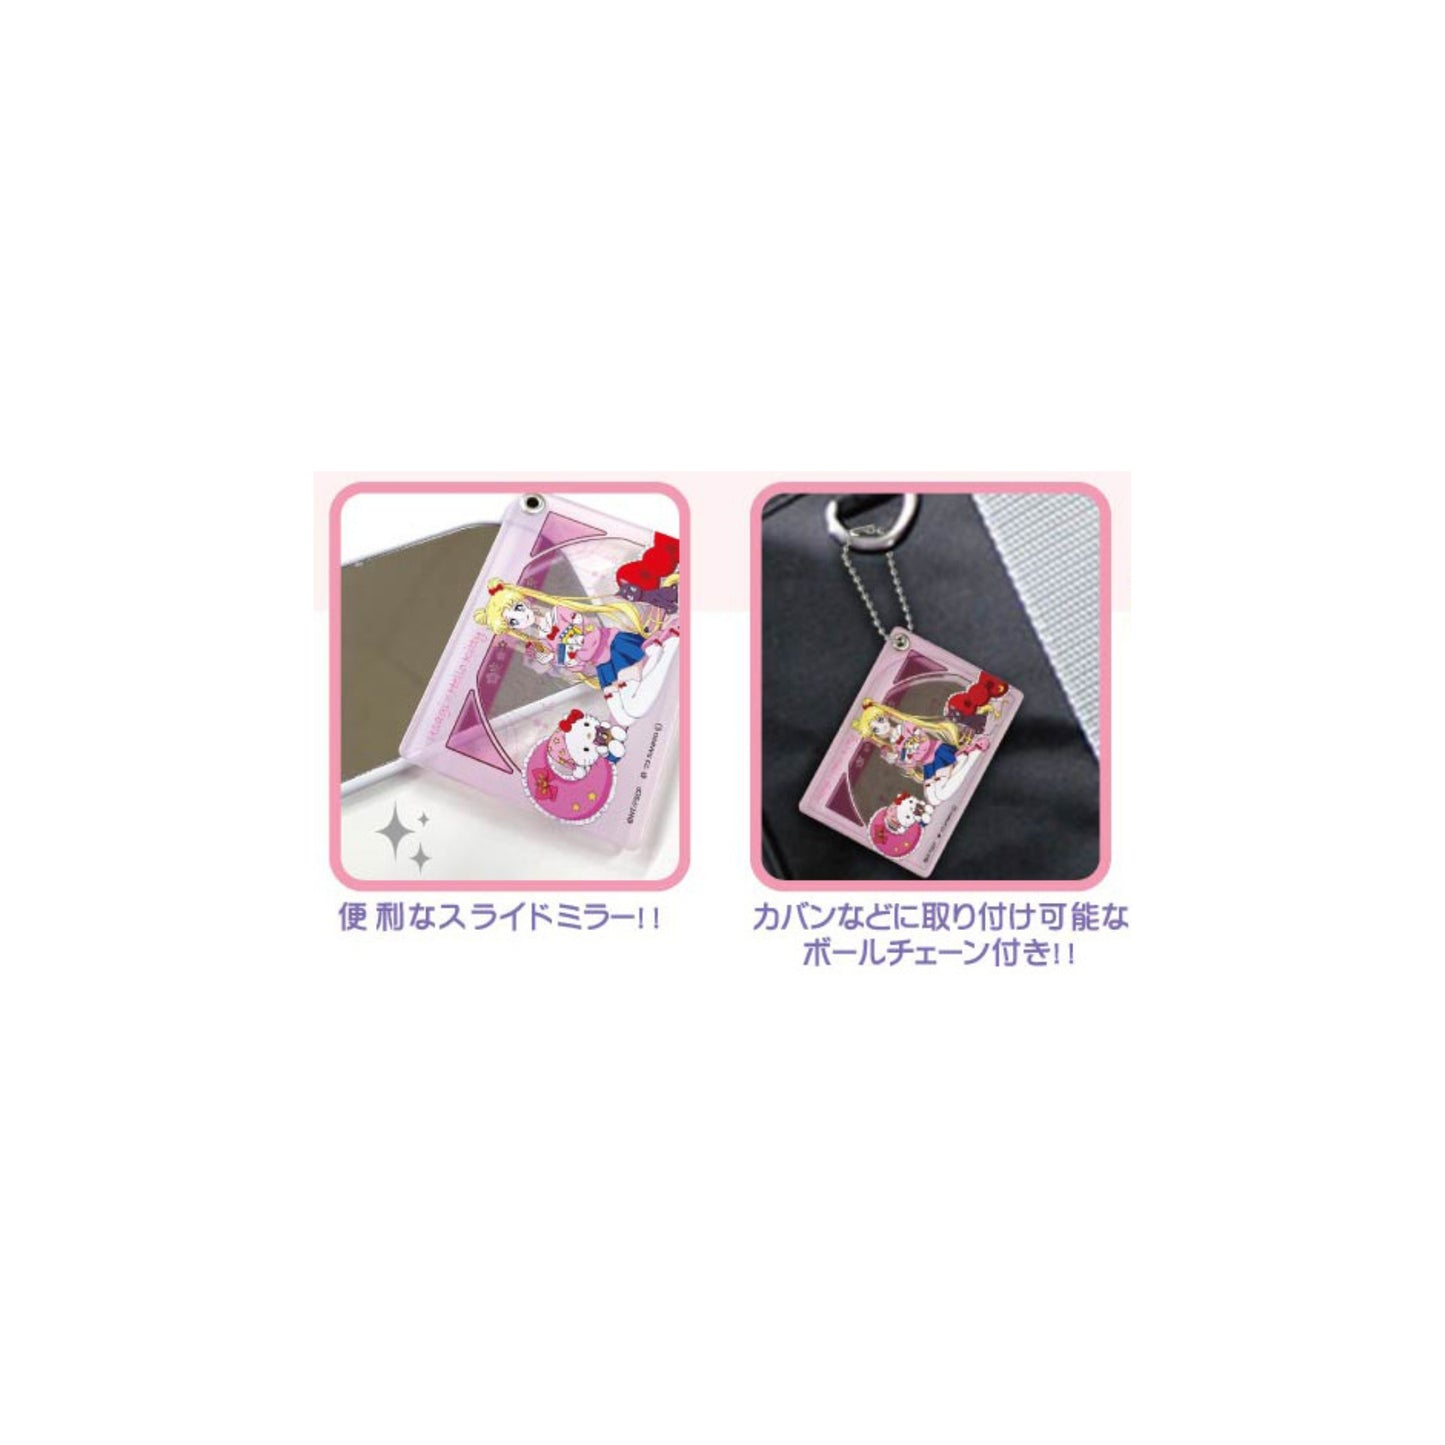 Sailor Moon x Sanrio Characters - Slide Mirror: Hotaru x My Sweet Piano